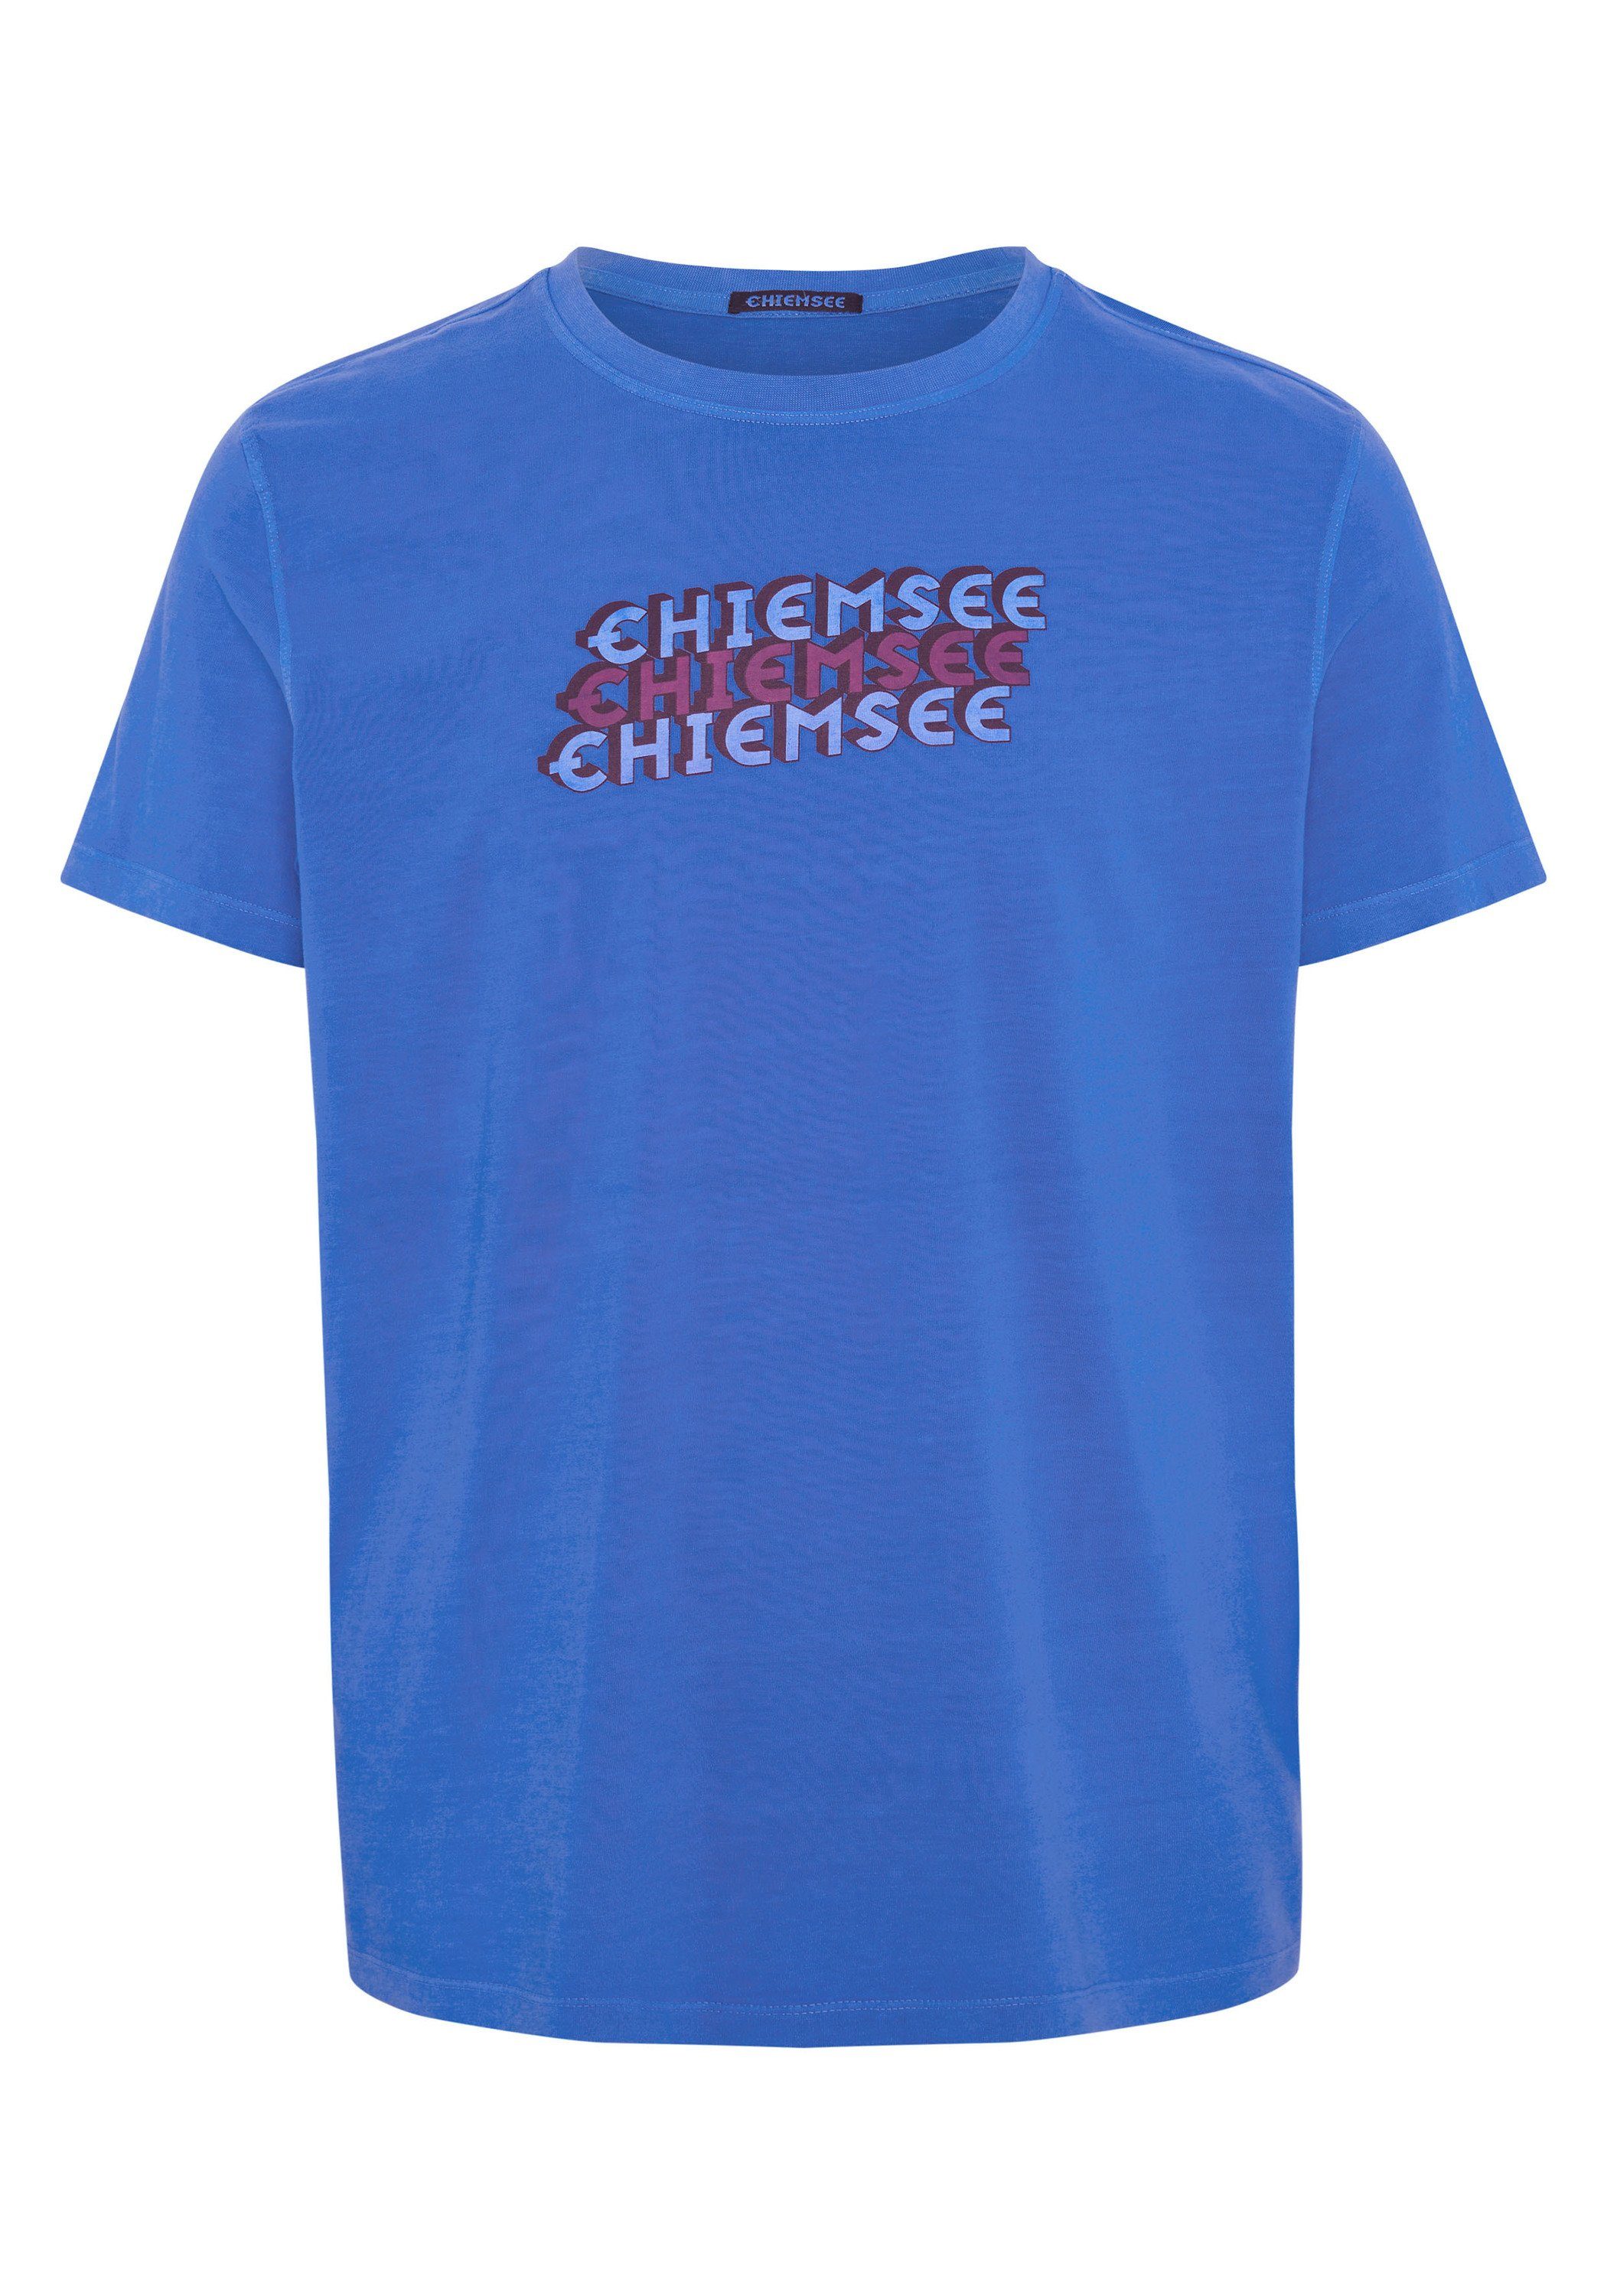 Print-Shirt Chiemsee Herren-Shirt Label-Design 1, im T-Shirt Baumwolljersey CHIEMSEE aus